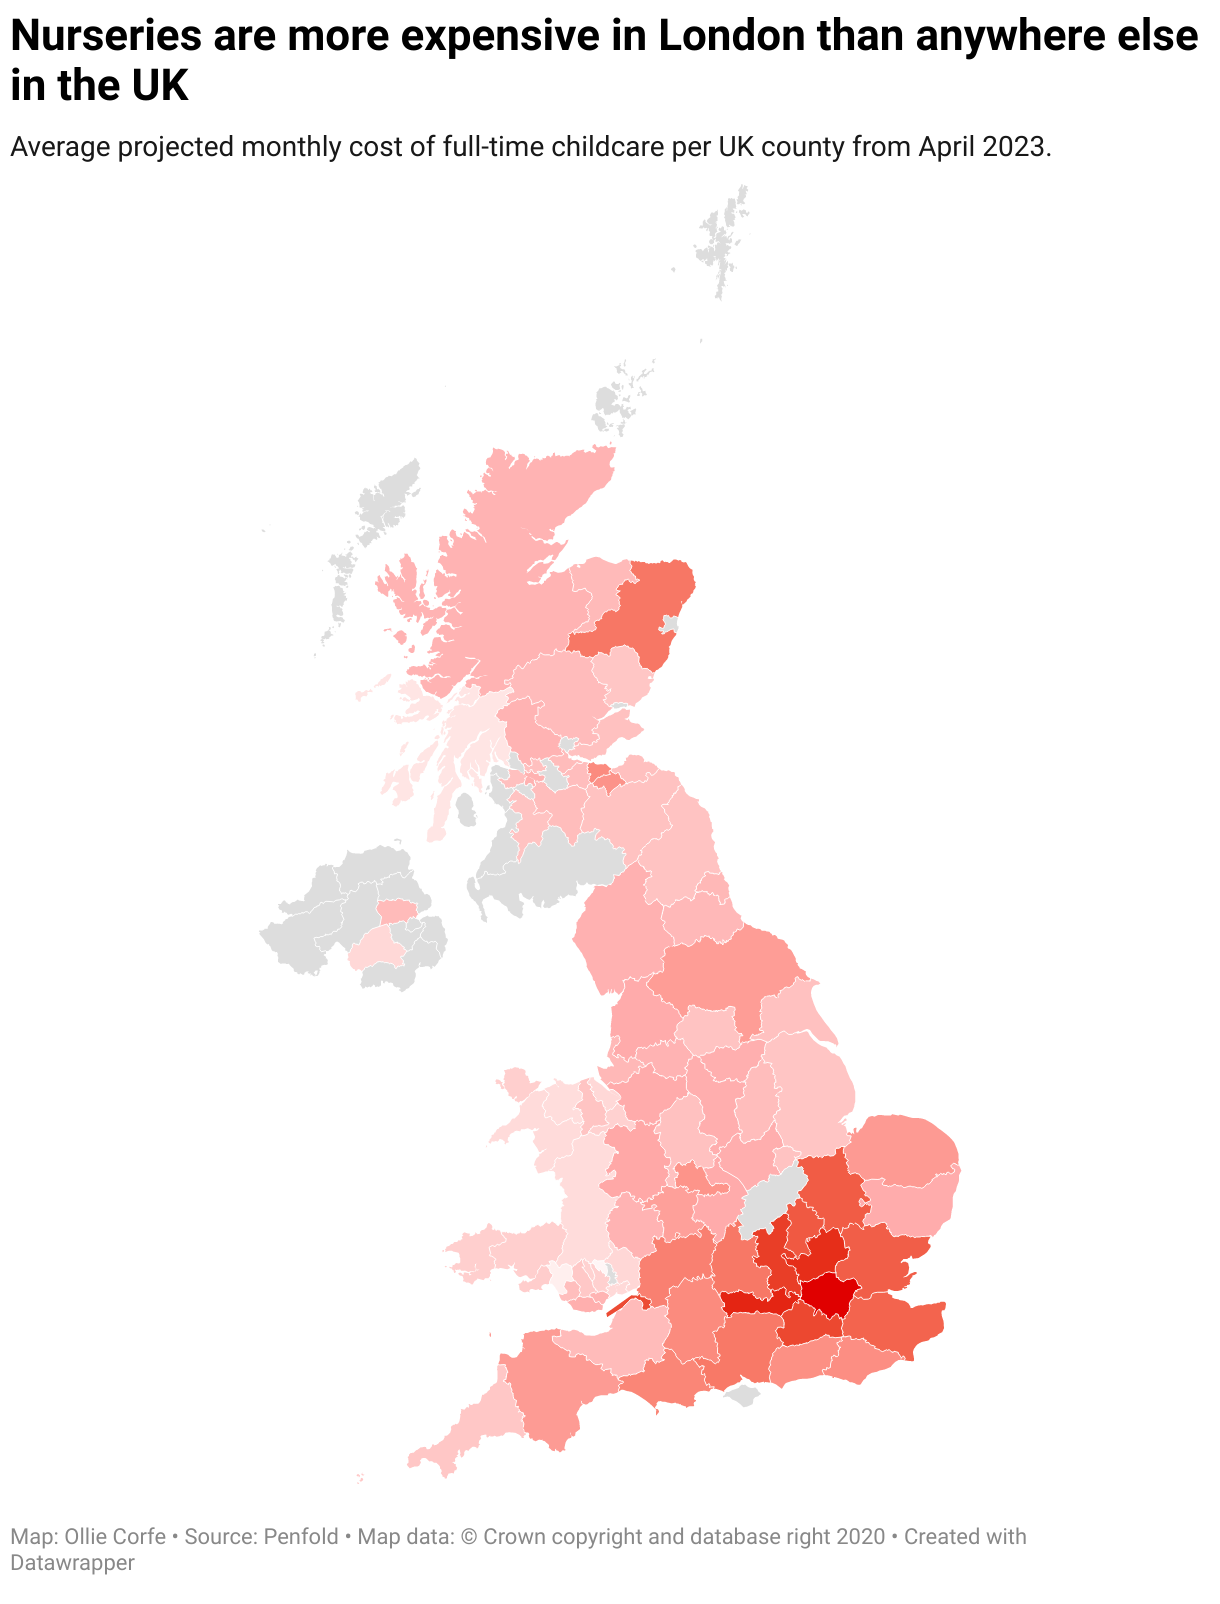 Nursery cost map around the UK.